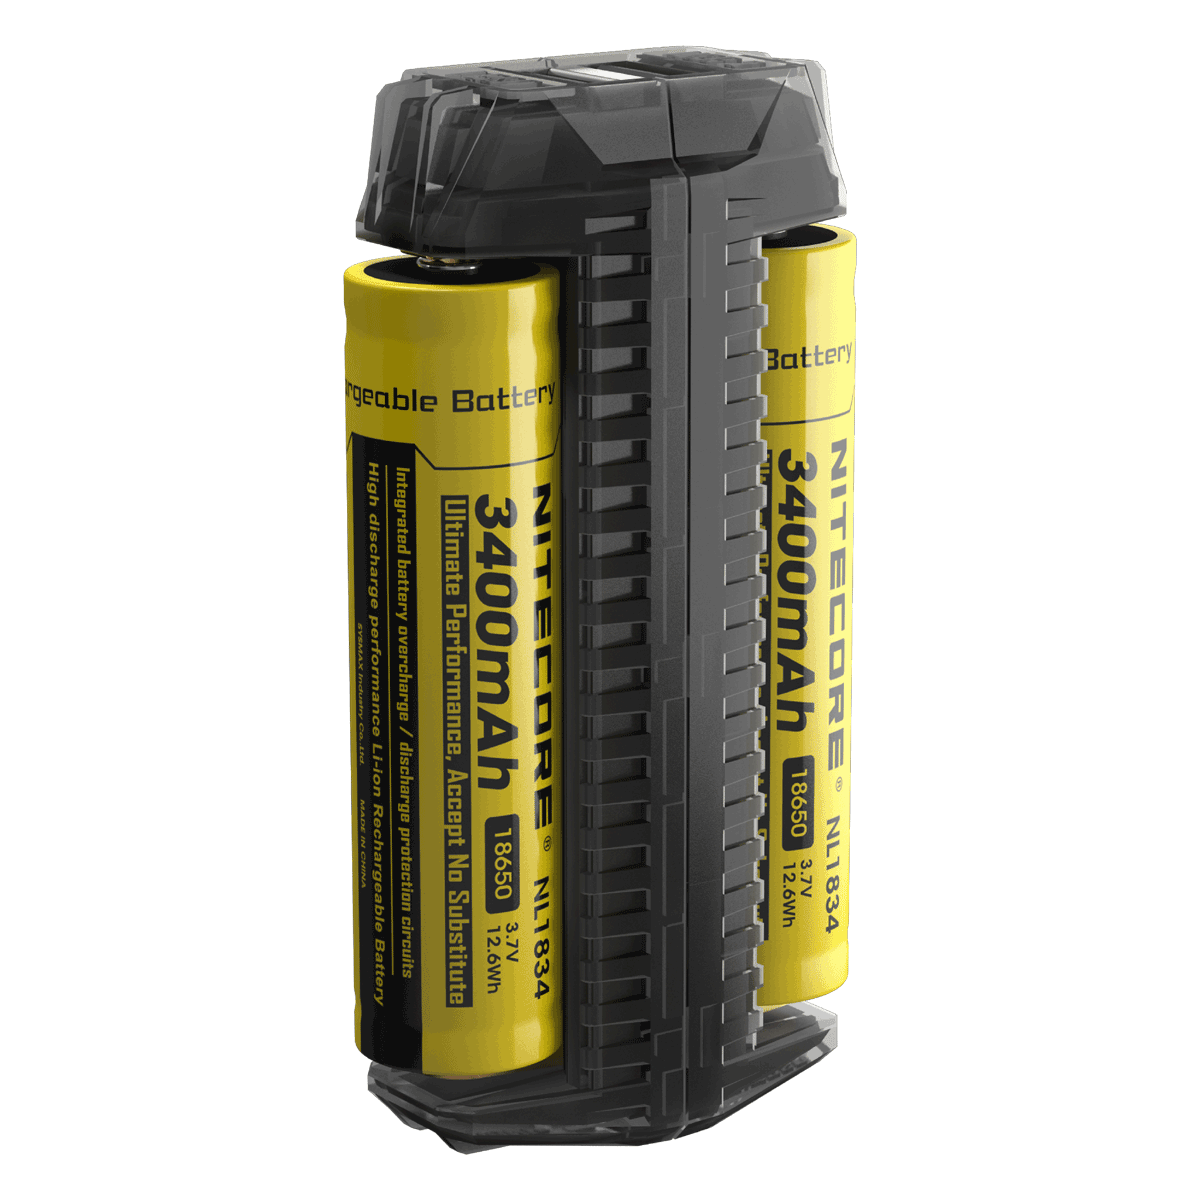 Nitecore NL1834 3400mAh Rechargeable 18650 Battery